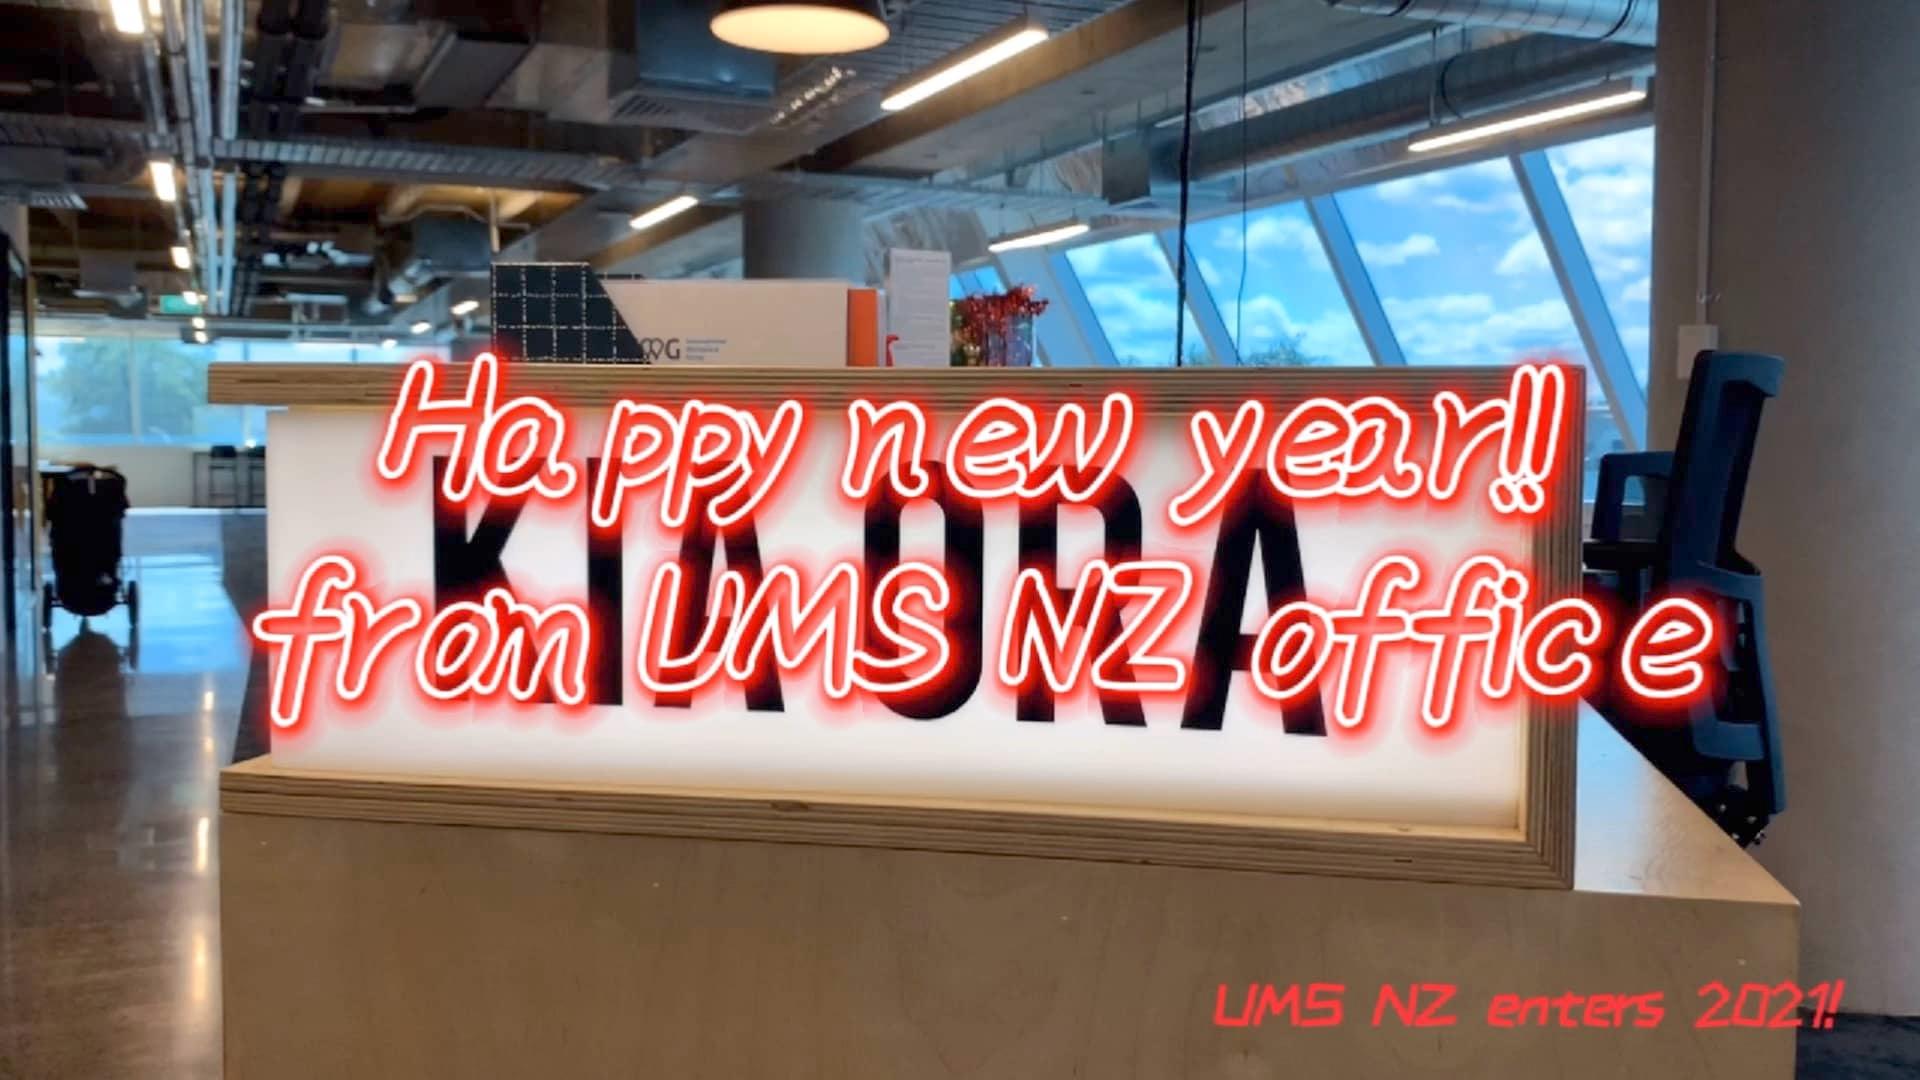 UMS NZ Enters 2021!